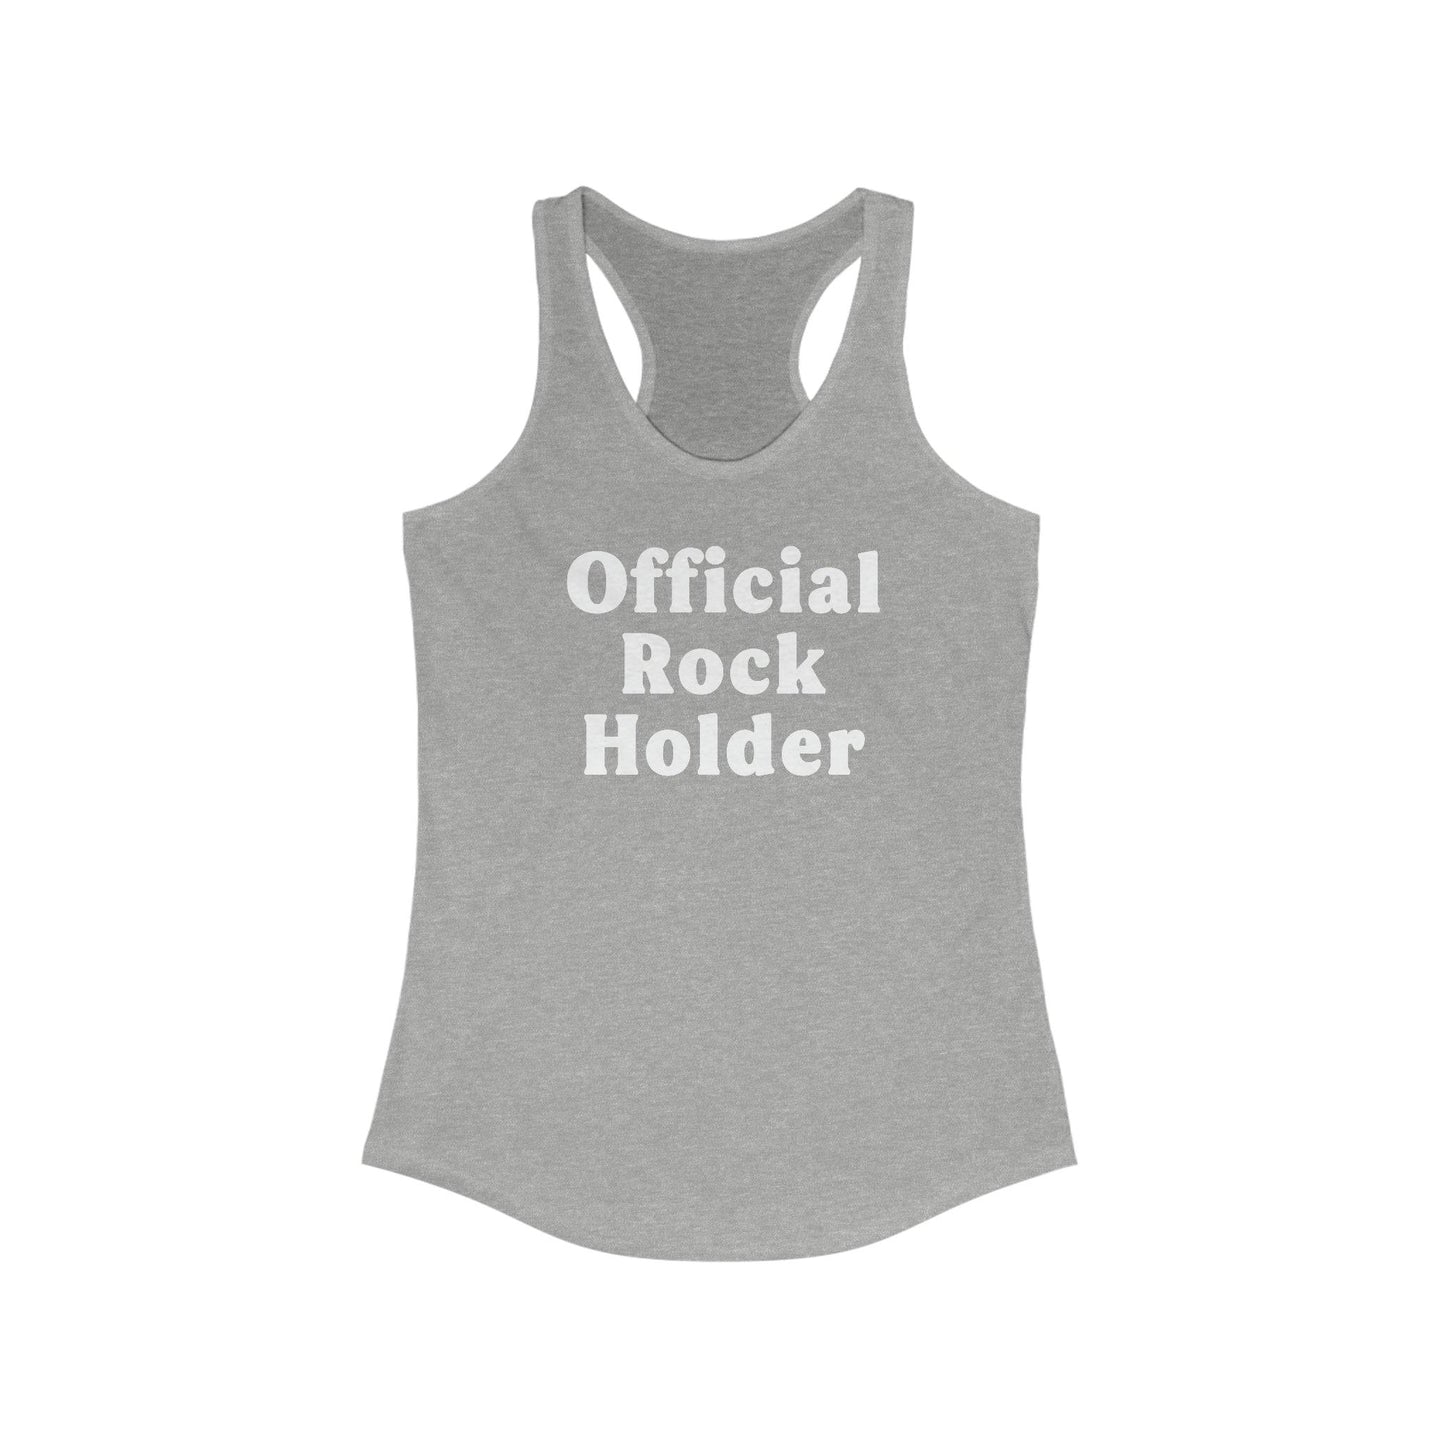 Official Rock Holder Women's Racerback Tank